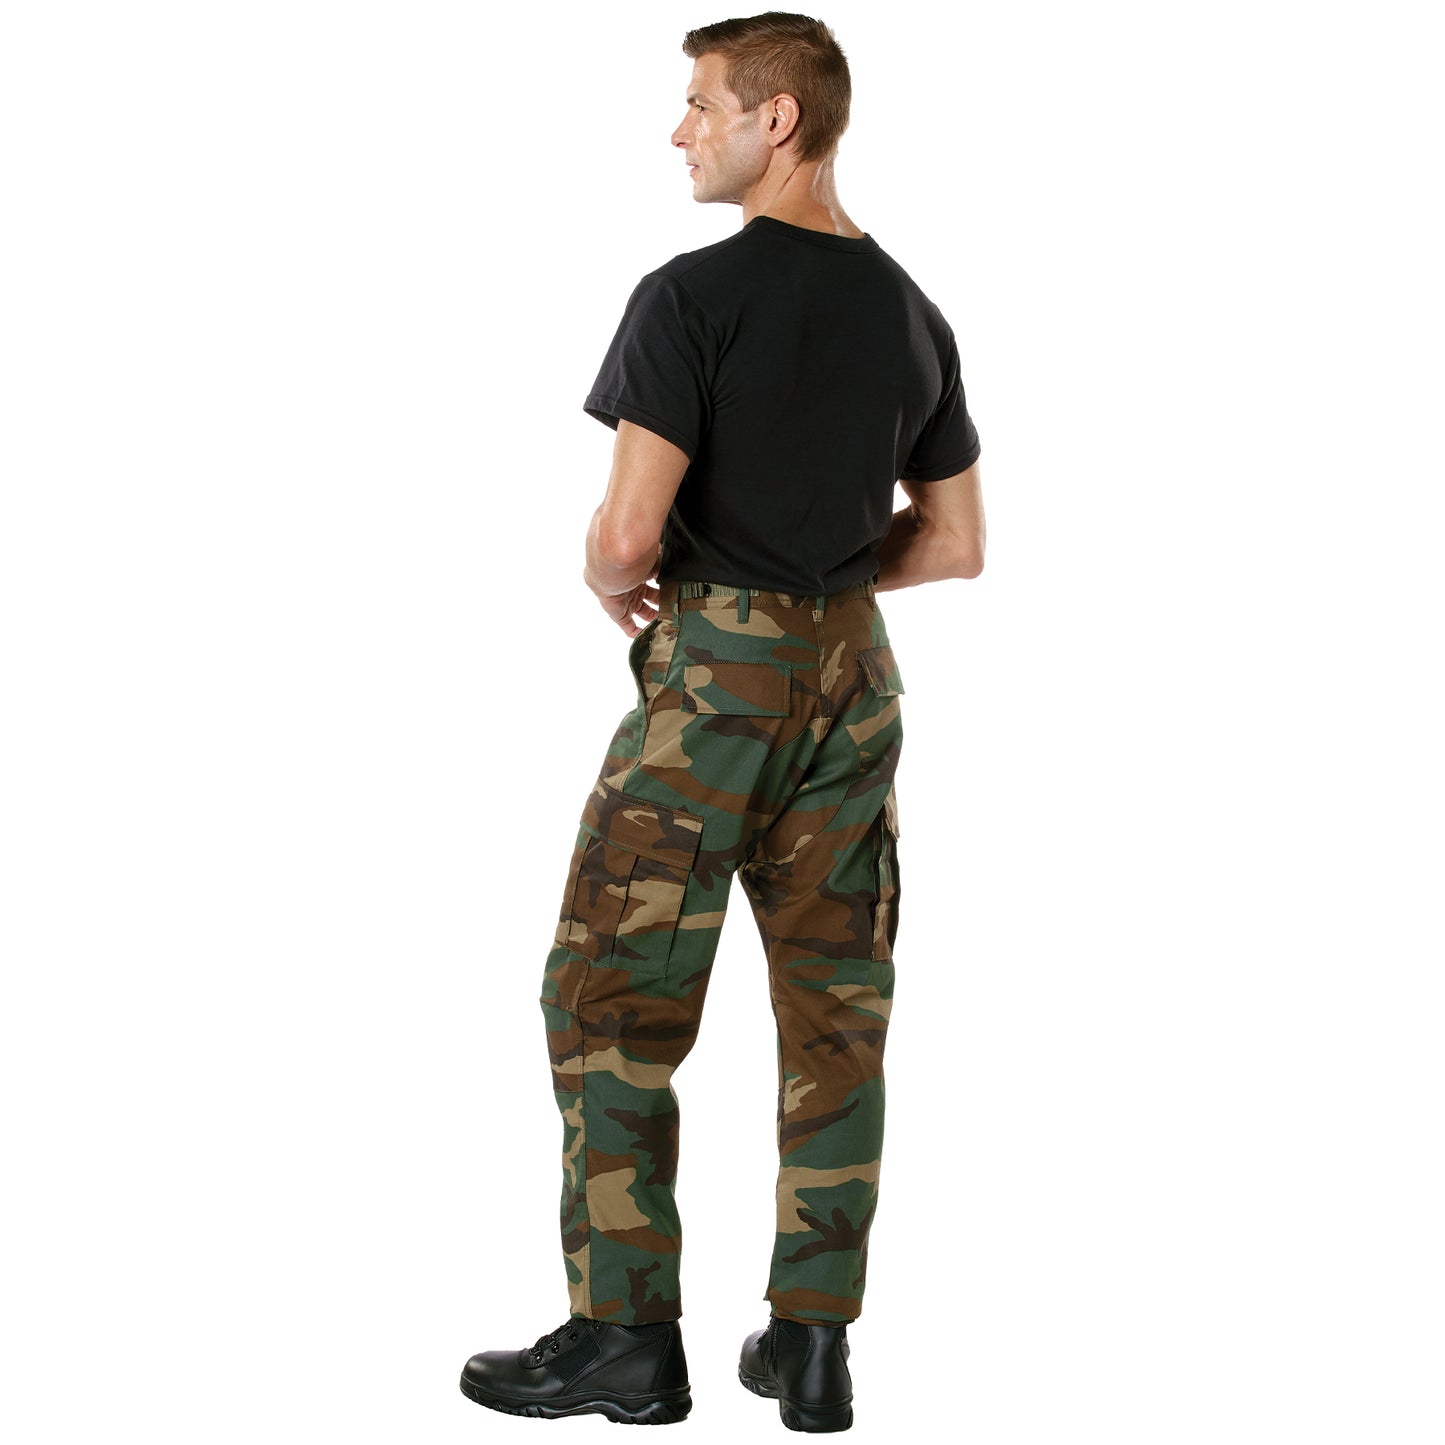 Gi Style BDU Pants - Army Cargo Fatigue Camouflage Camo